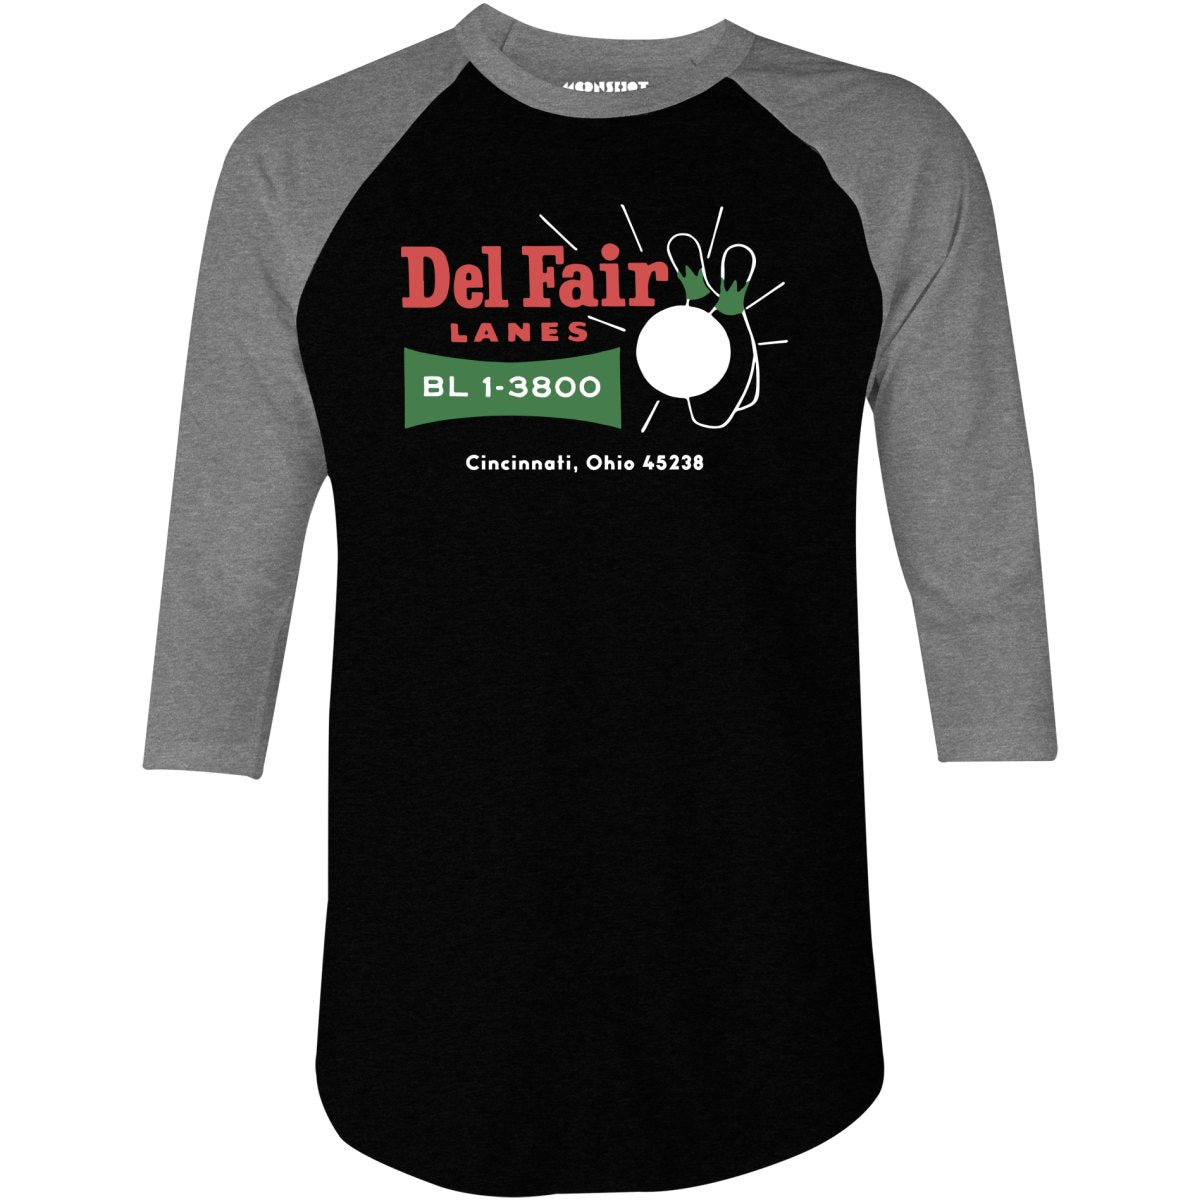 Del Fair Lanes v2 - Cincinnati, OH - Vintage Bowling Alley - 3/4 Sleeve Raglan T-Shirt